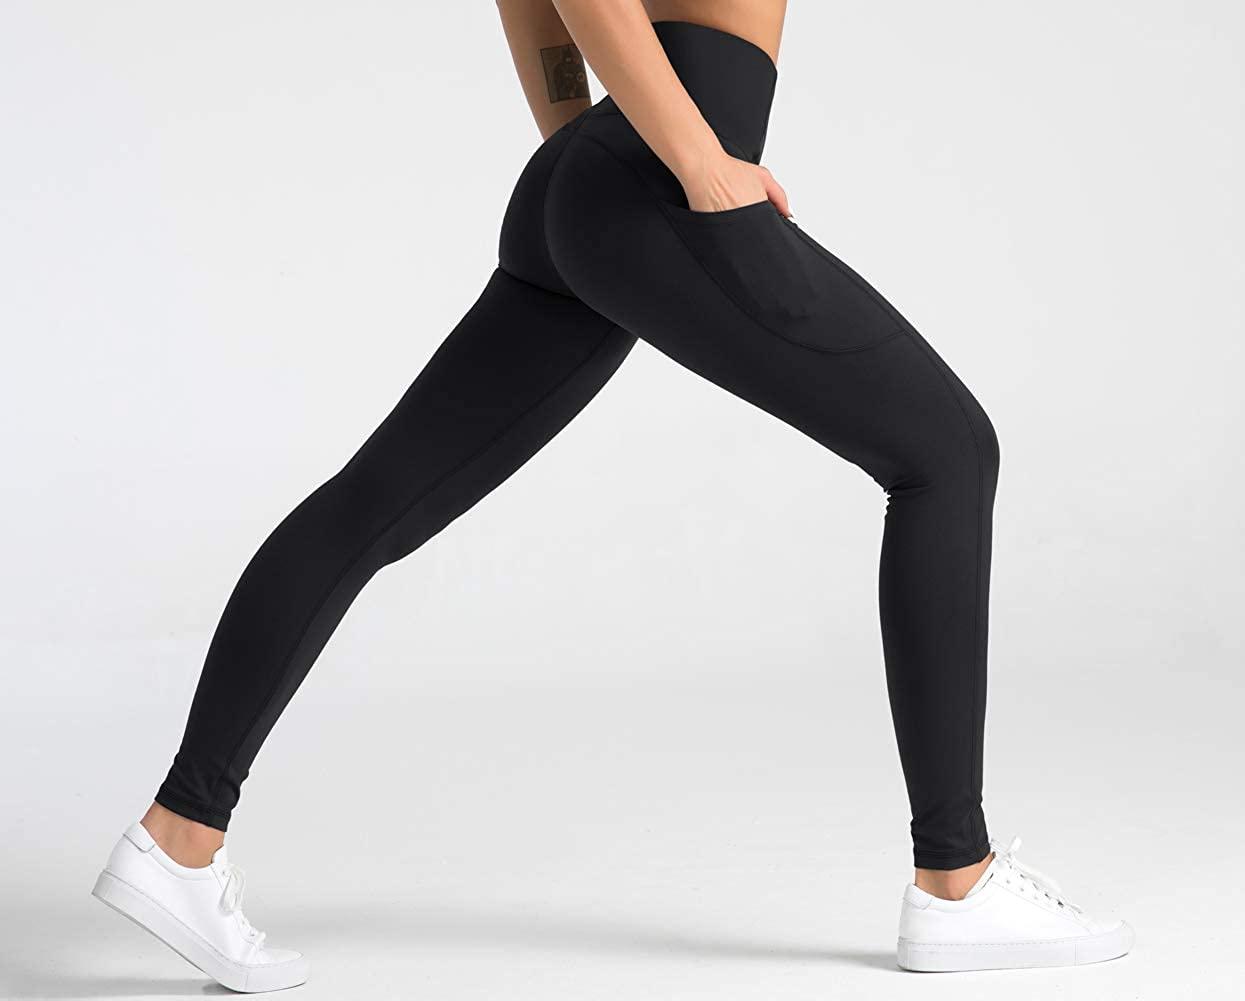 Dragon Fit compression Yoga Pants Power Stretch Workout Leggings